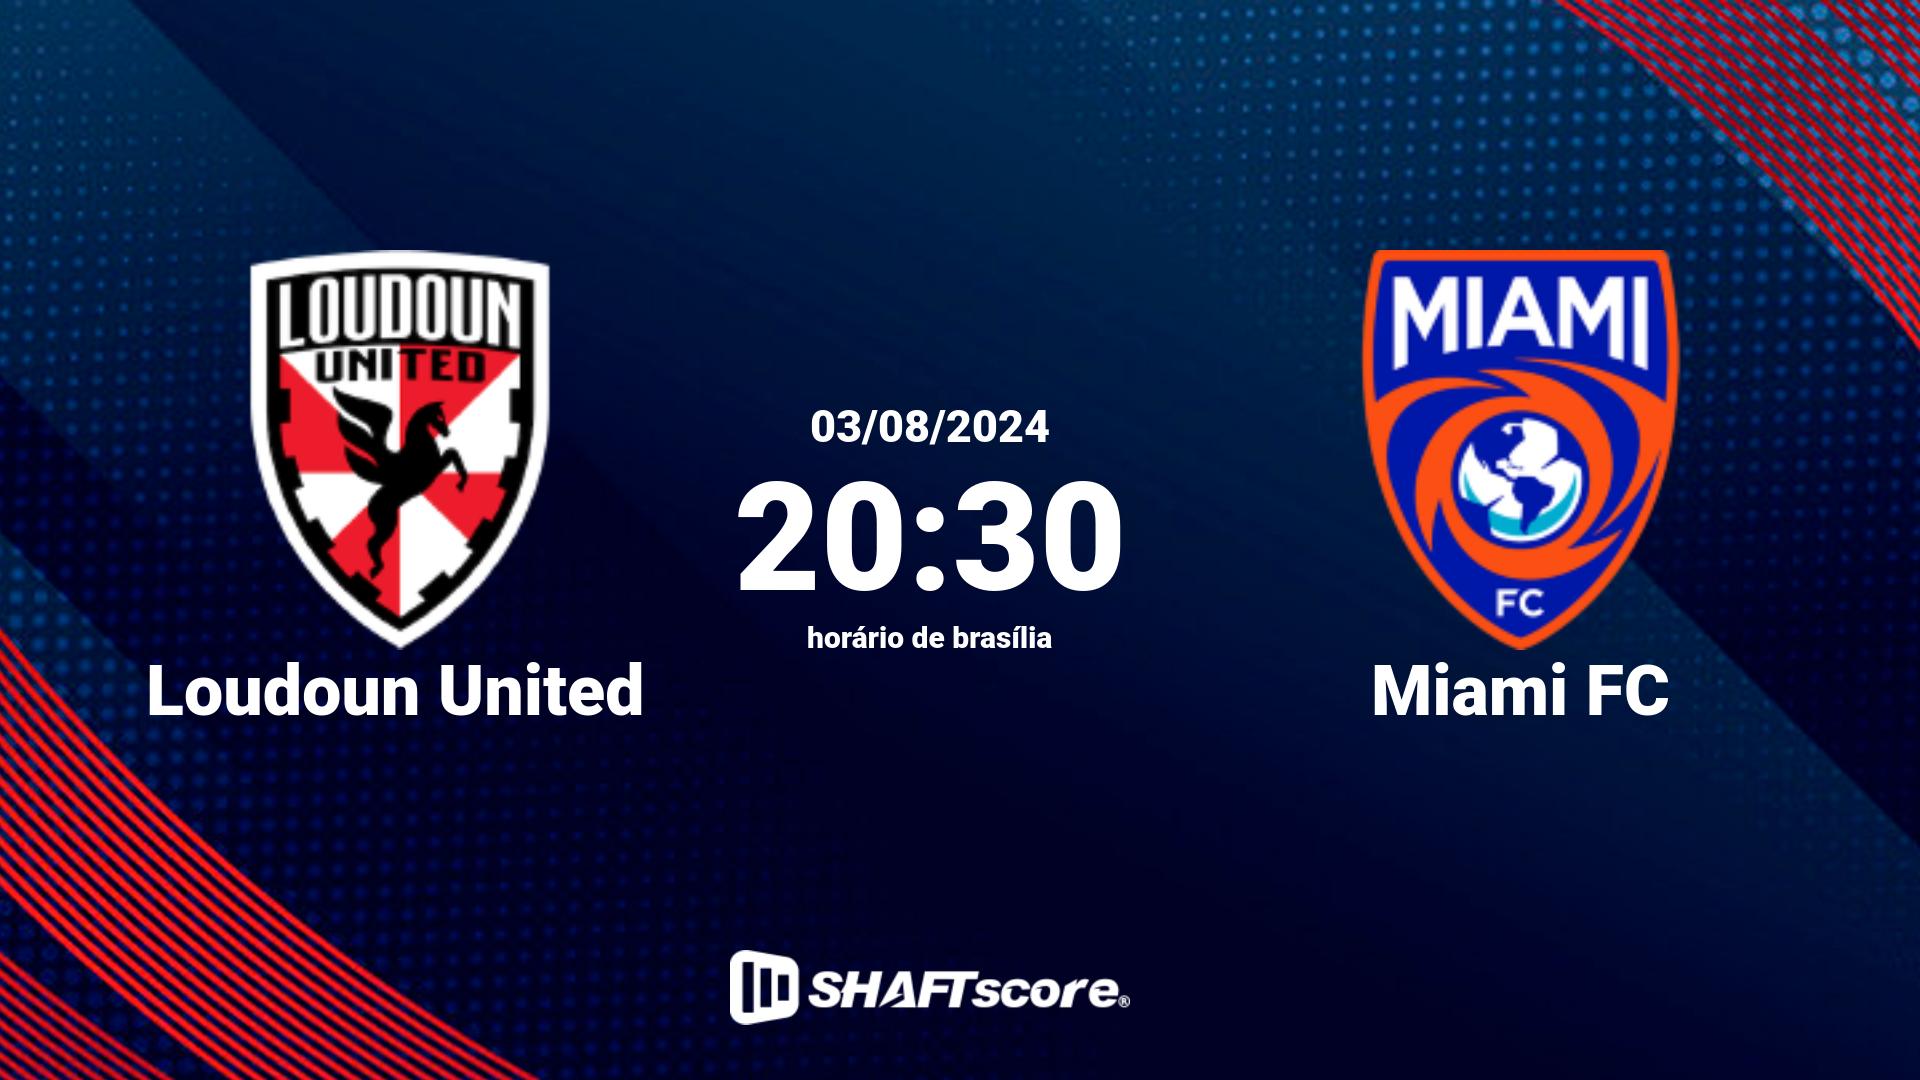 Estatísticas do jogo Loudoun United vs Miami FC 03.08 20:30